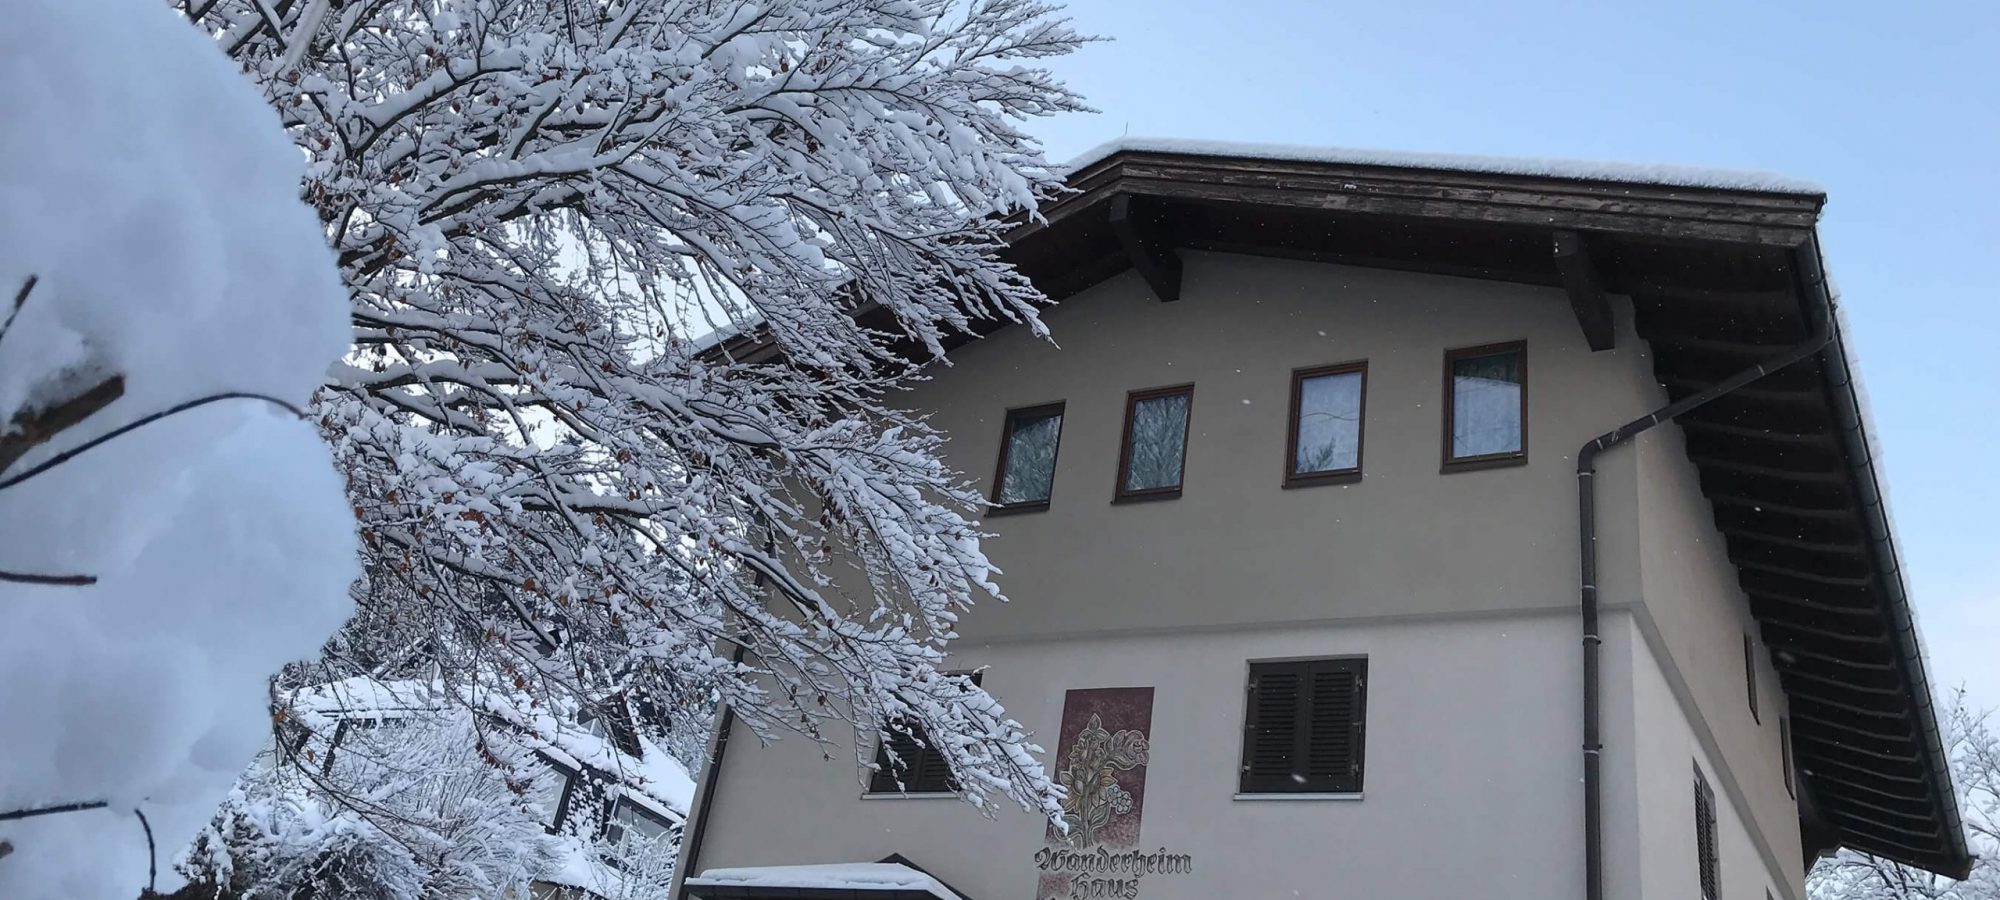 Wanderheim Haus Altvater im Winter